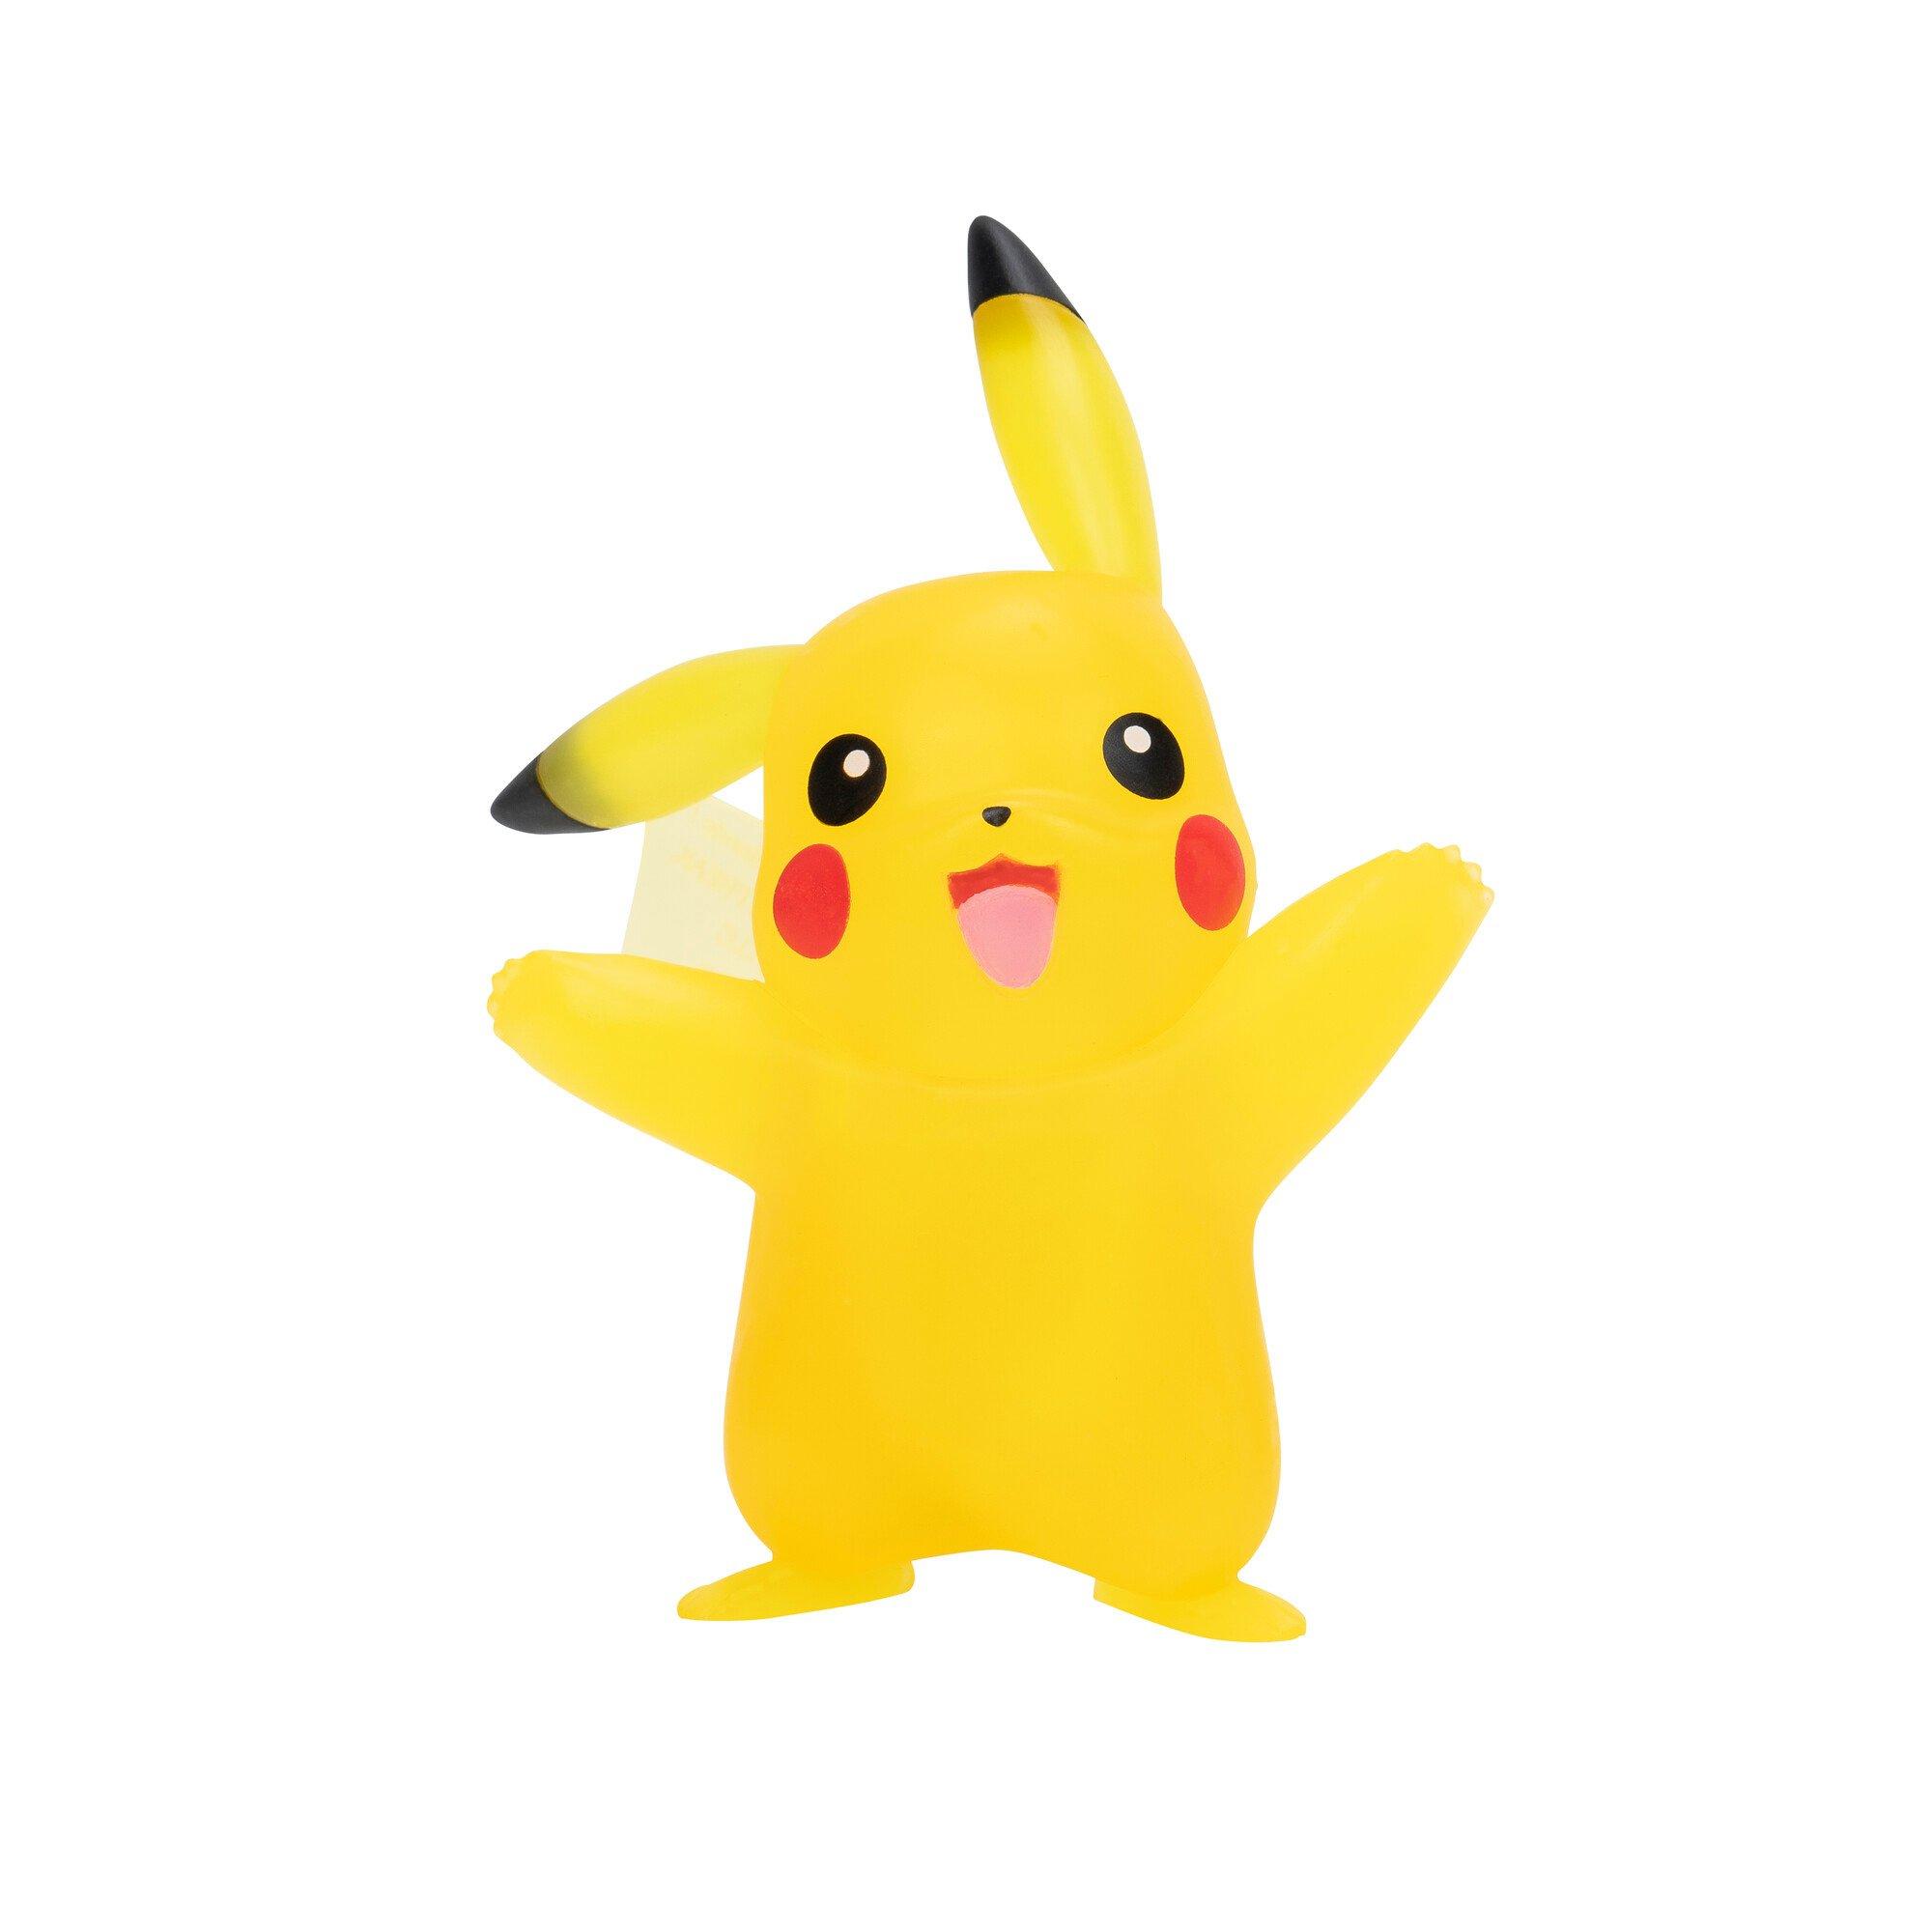 Figurines Pokémon Select Mini Figure - Pikachu Pokémon - UltraJeux